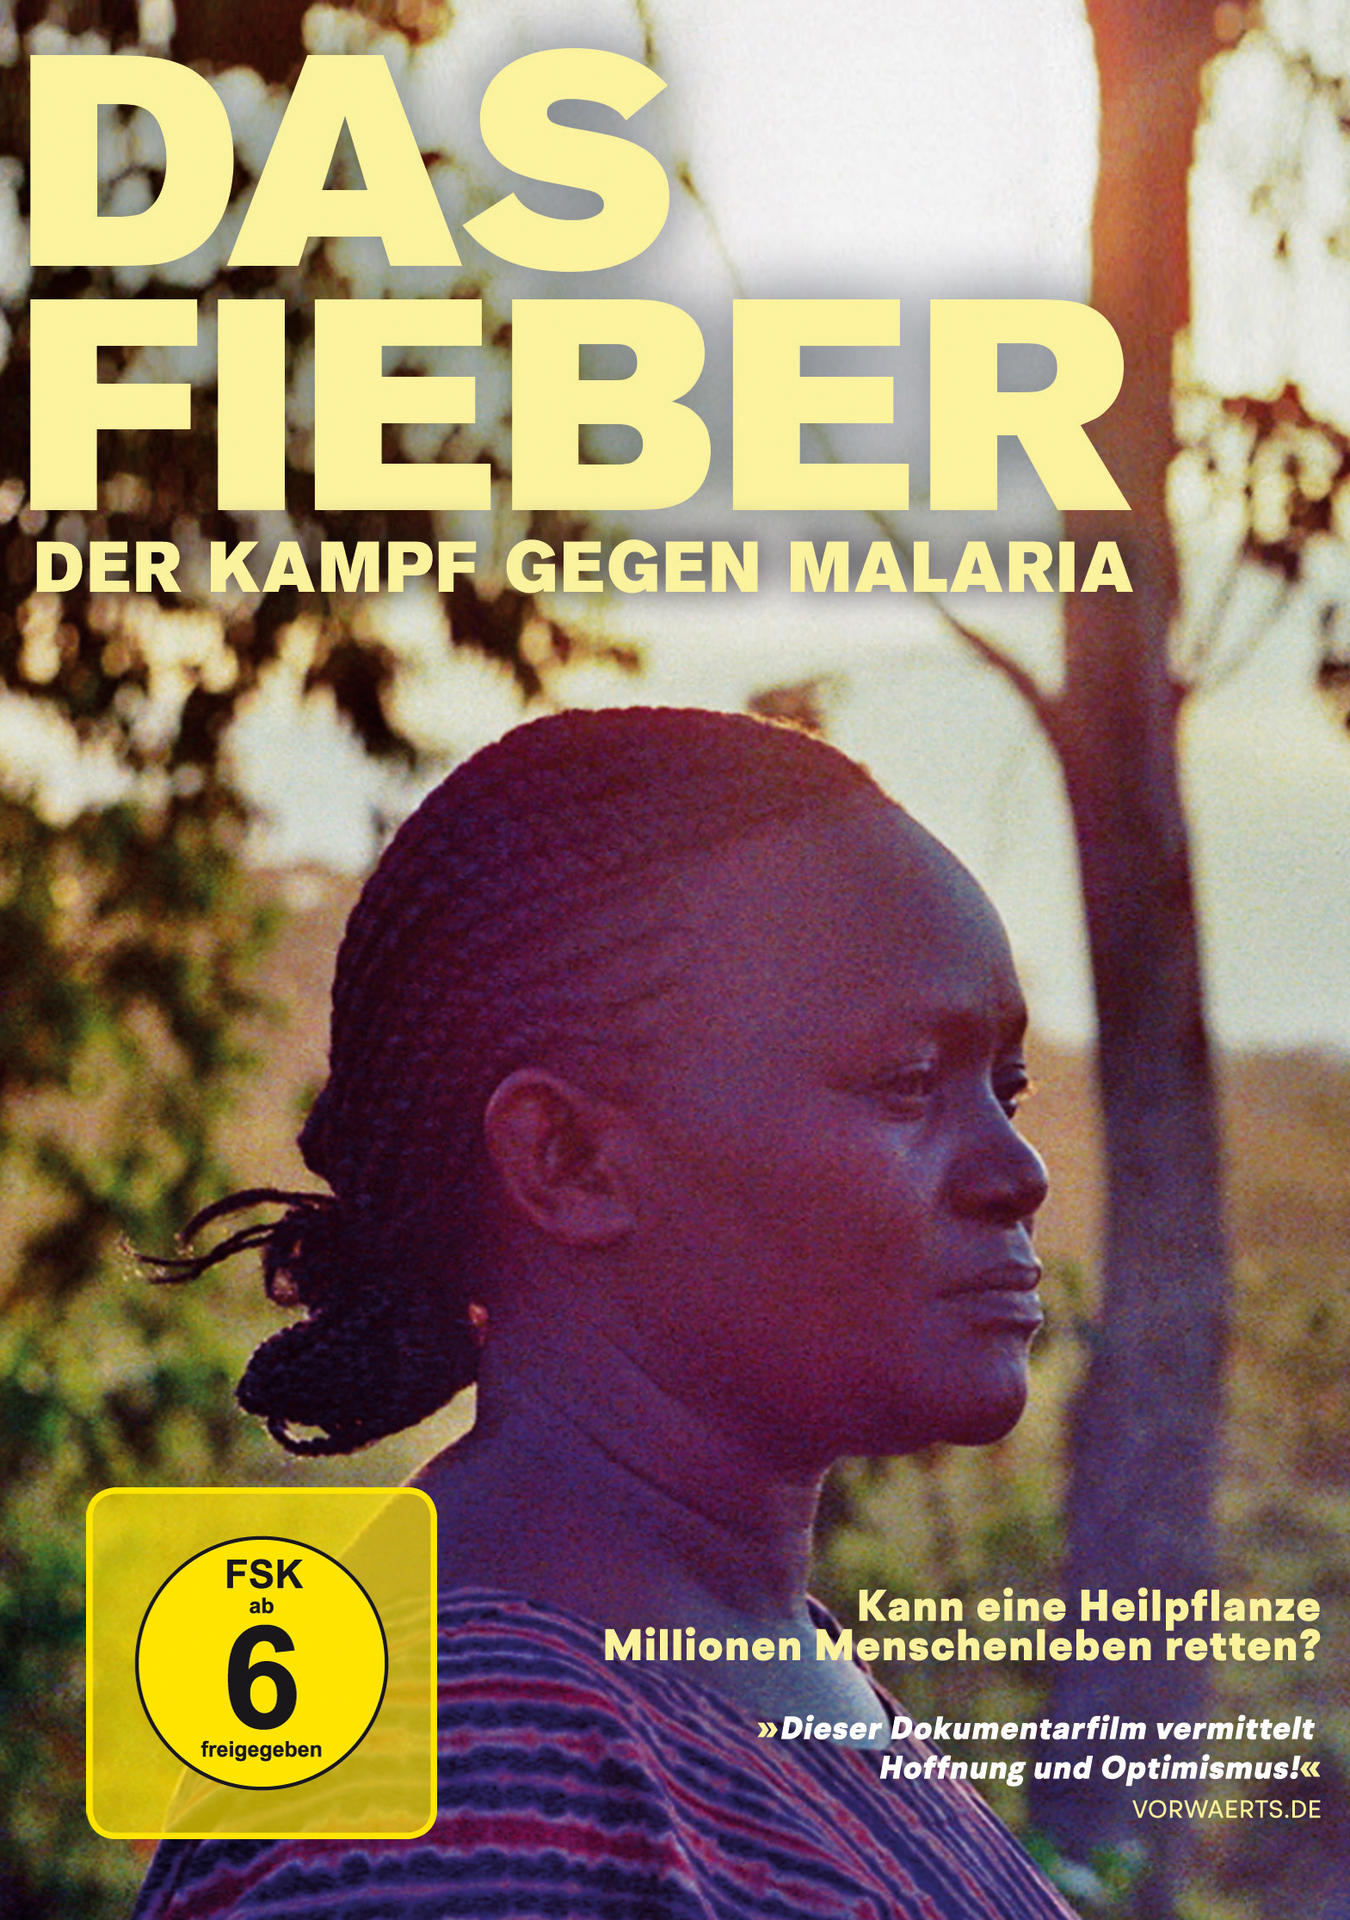 Malaria Das Fieber gegen Kampf DVD - Der